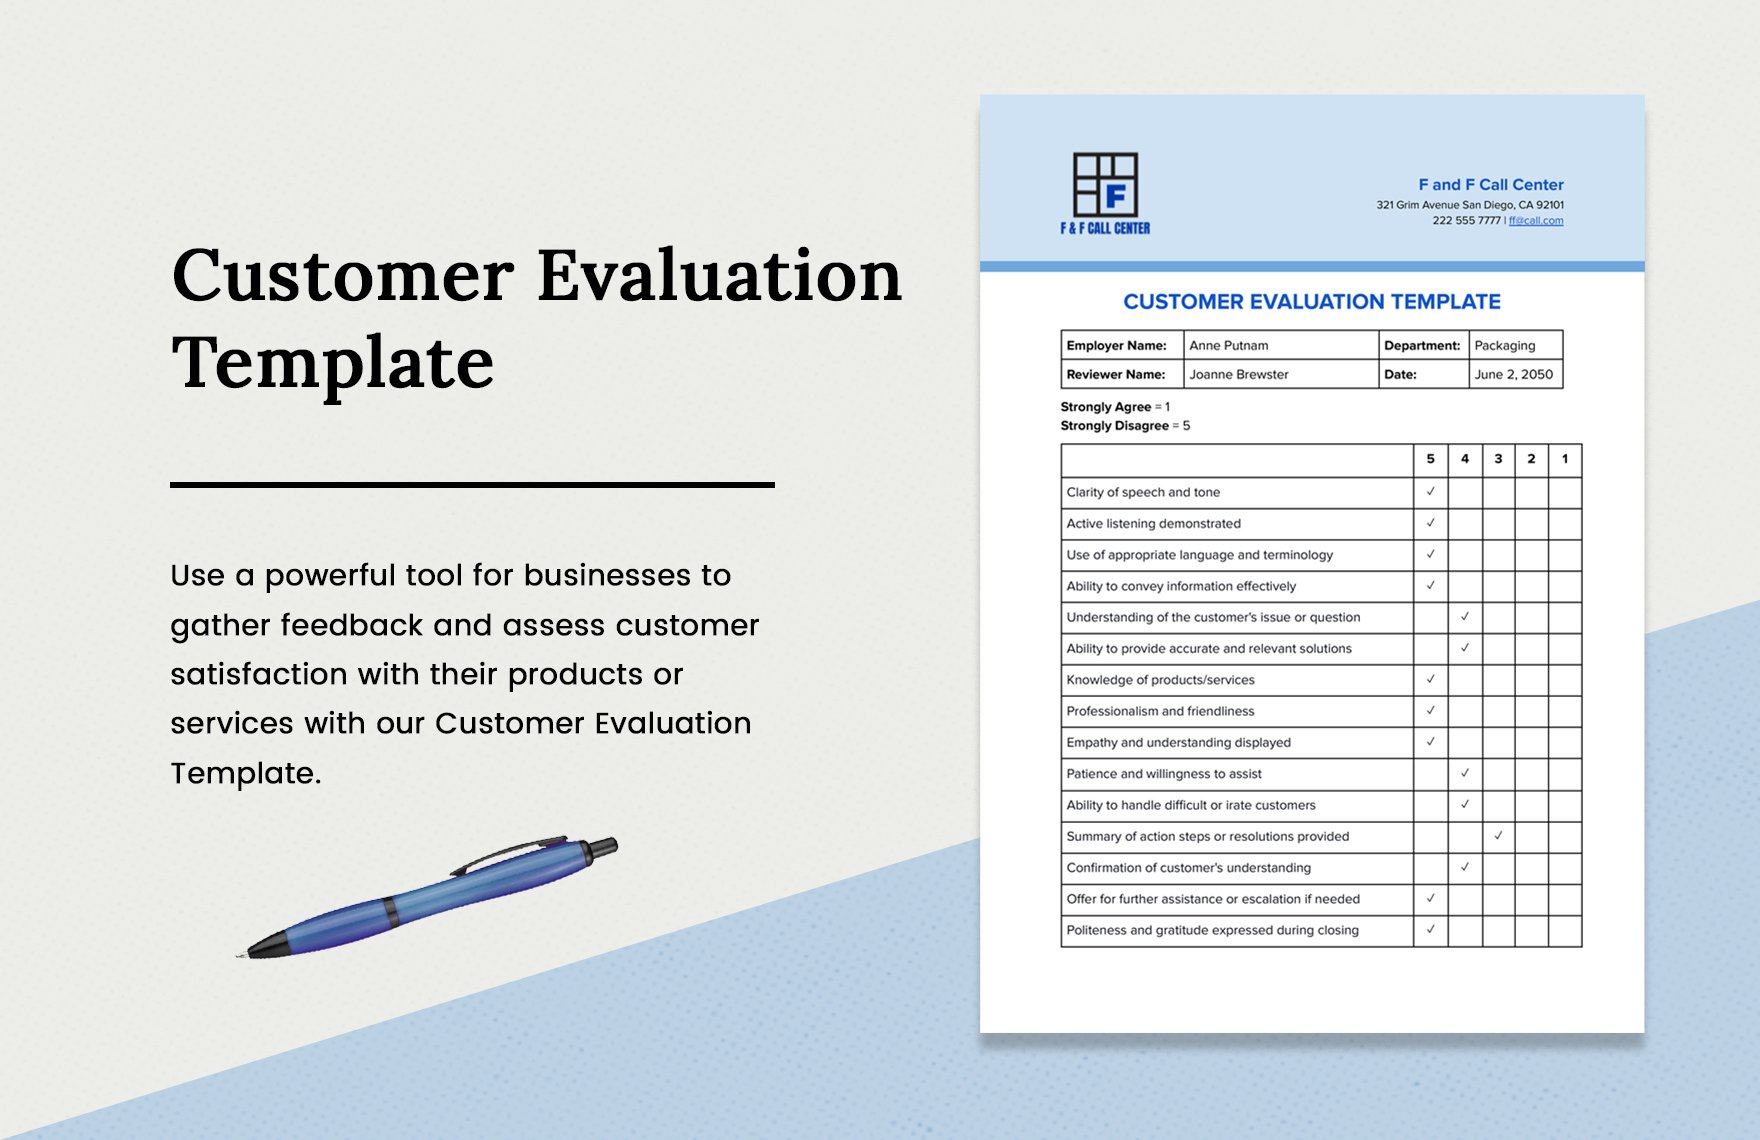 Customer Evaluation Template in Word, Google Docs, PDF